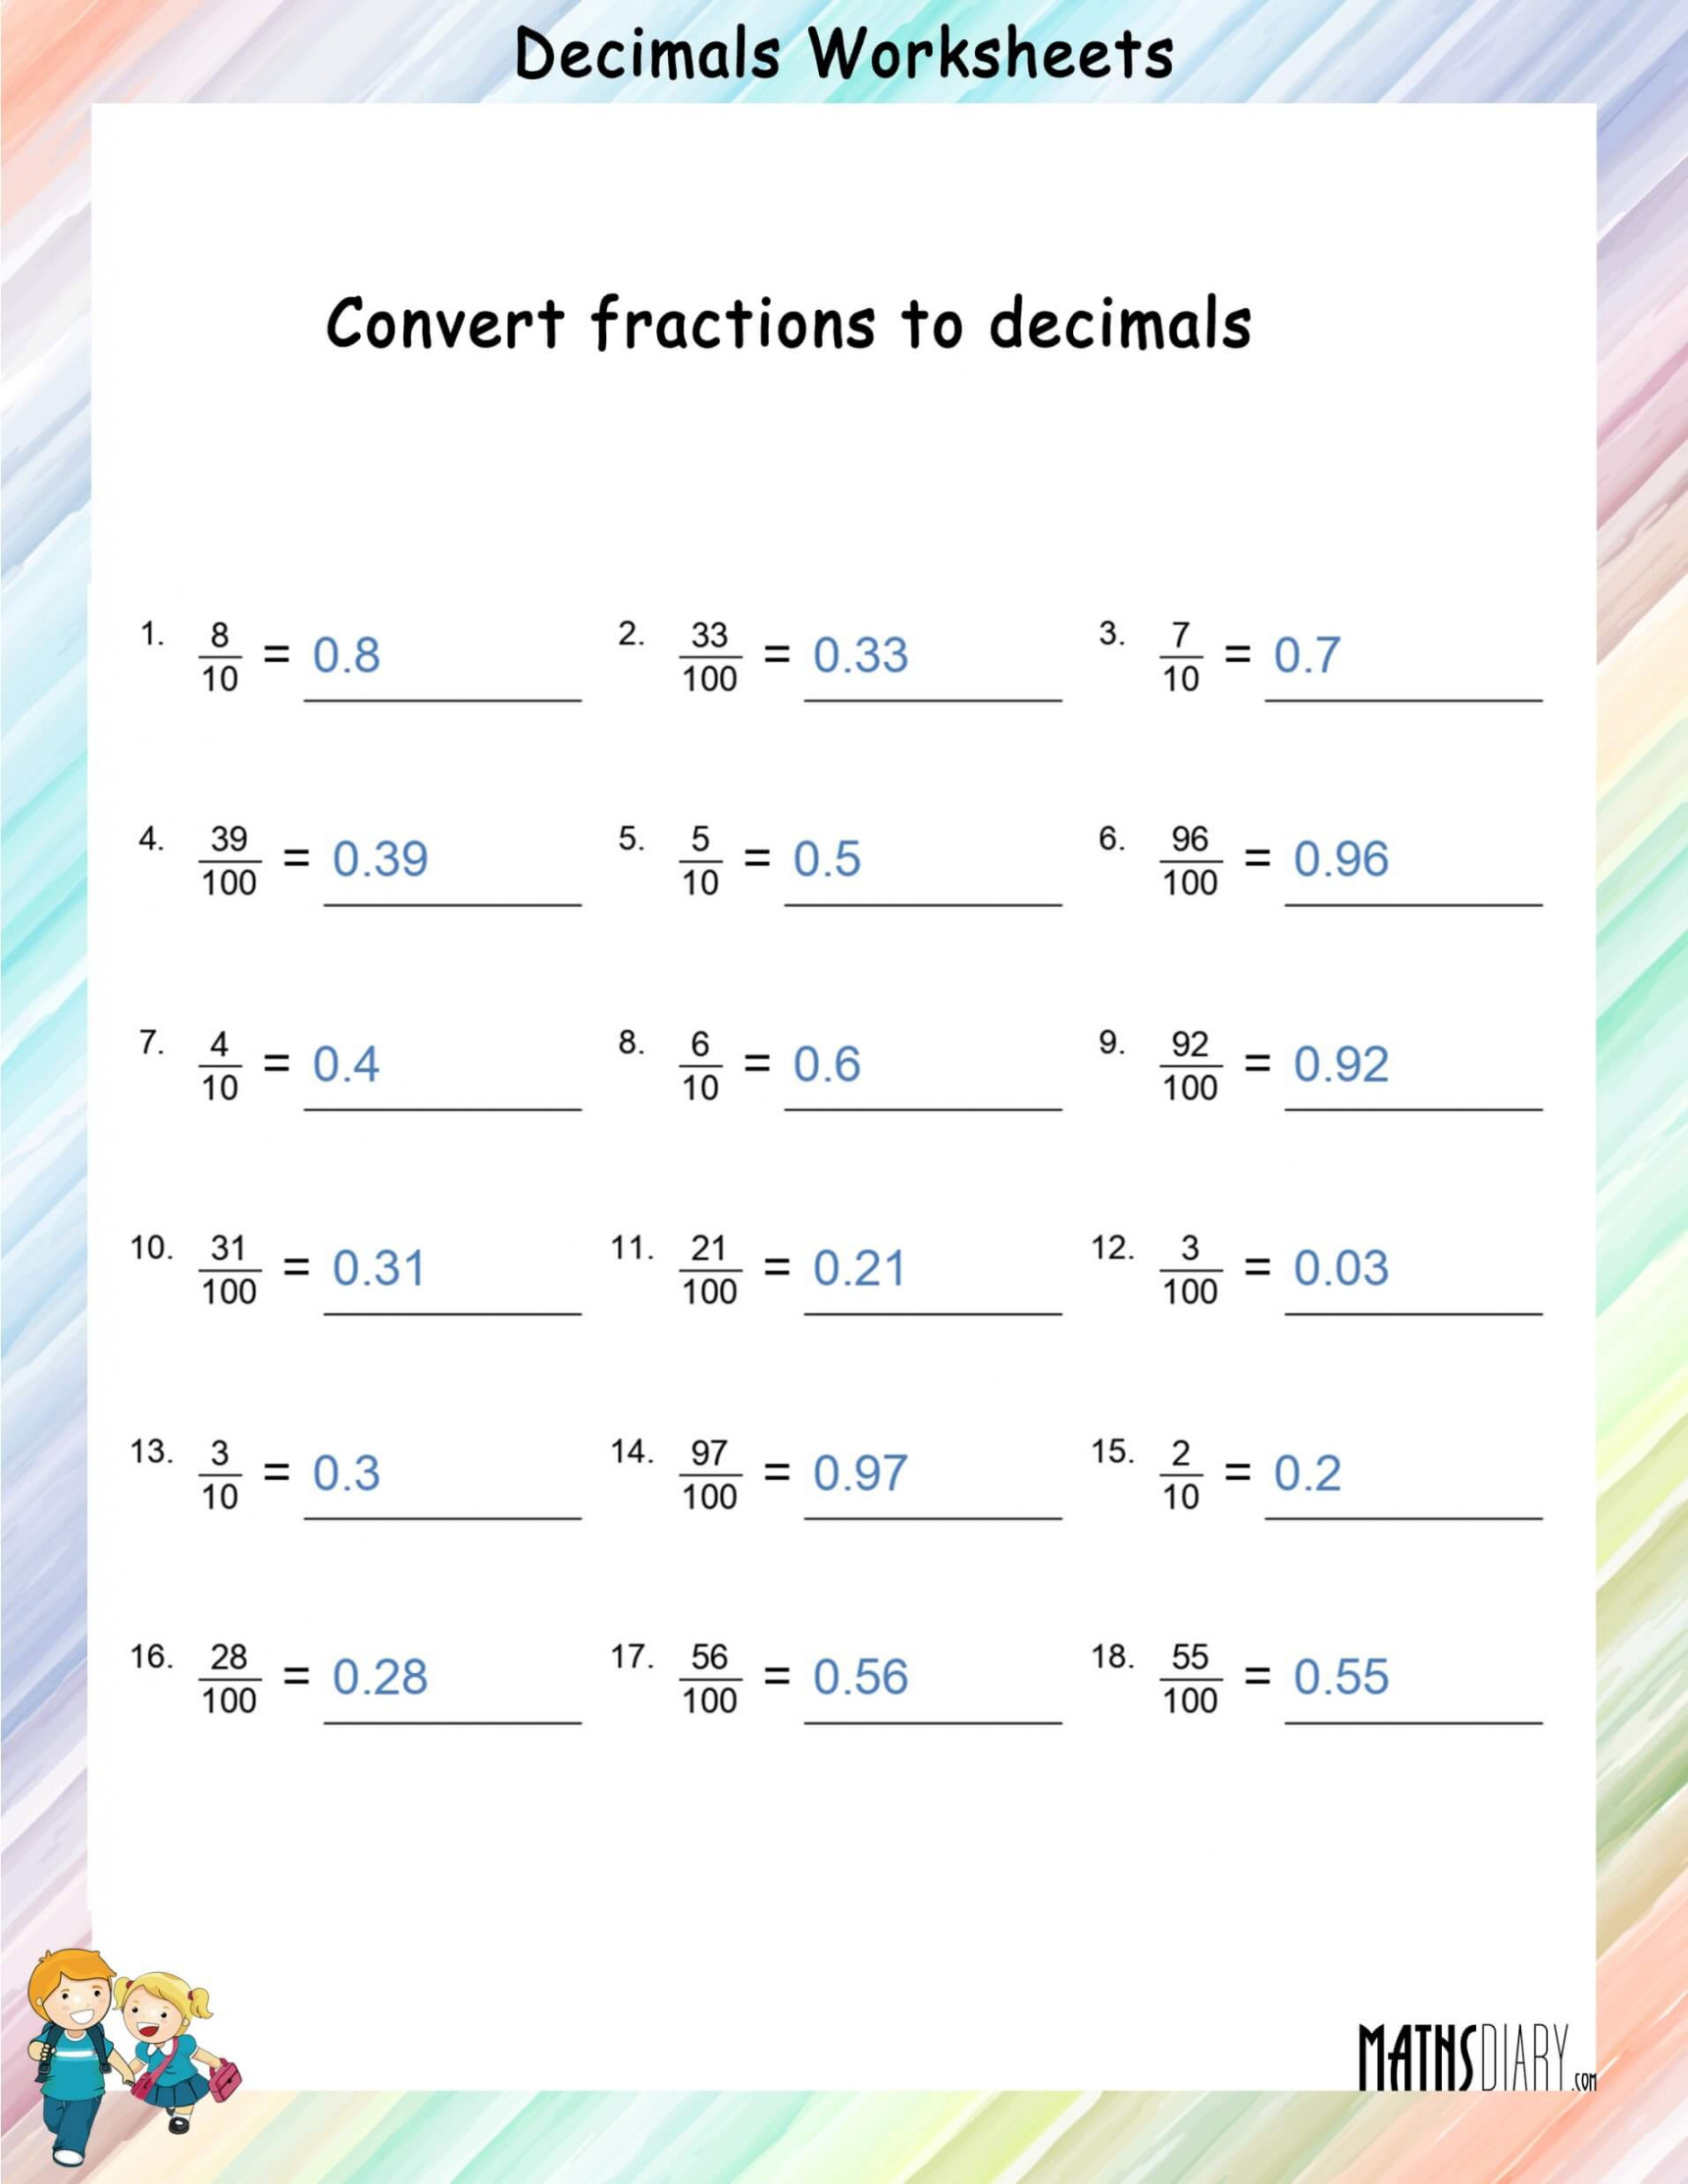 Convert fractions to decimals worksheets - Math Worksheets